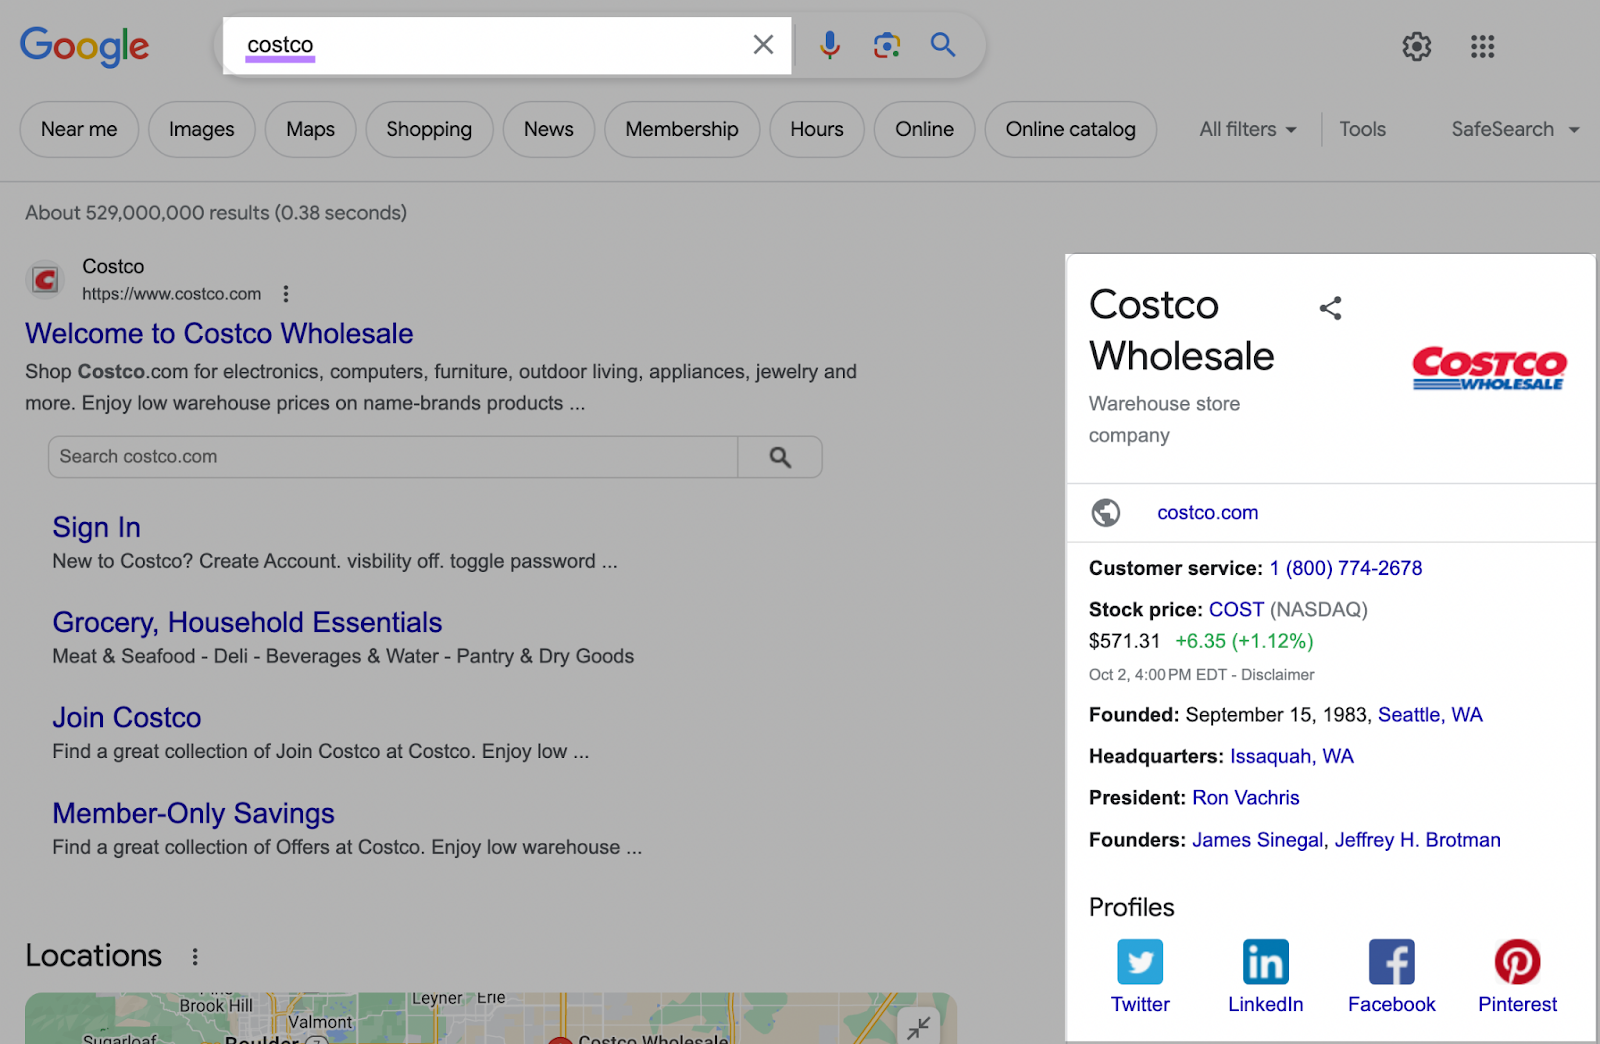 Google Knowledge Panel for "Costco Wholesale"